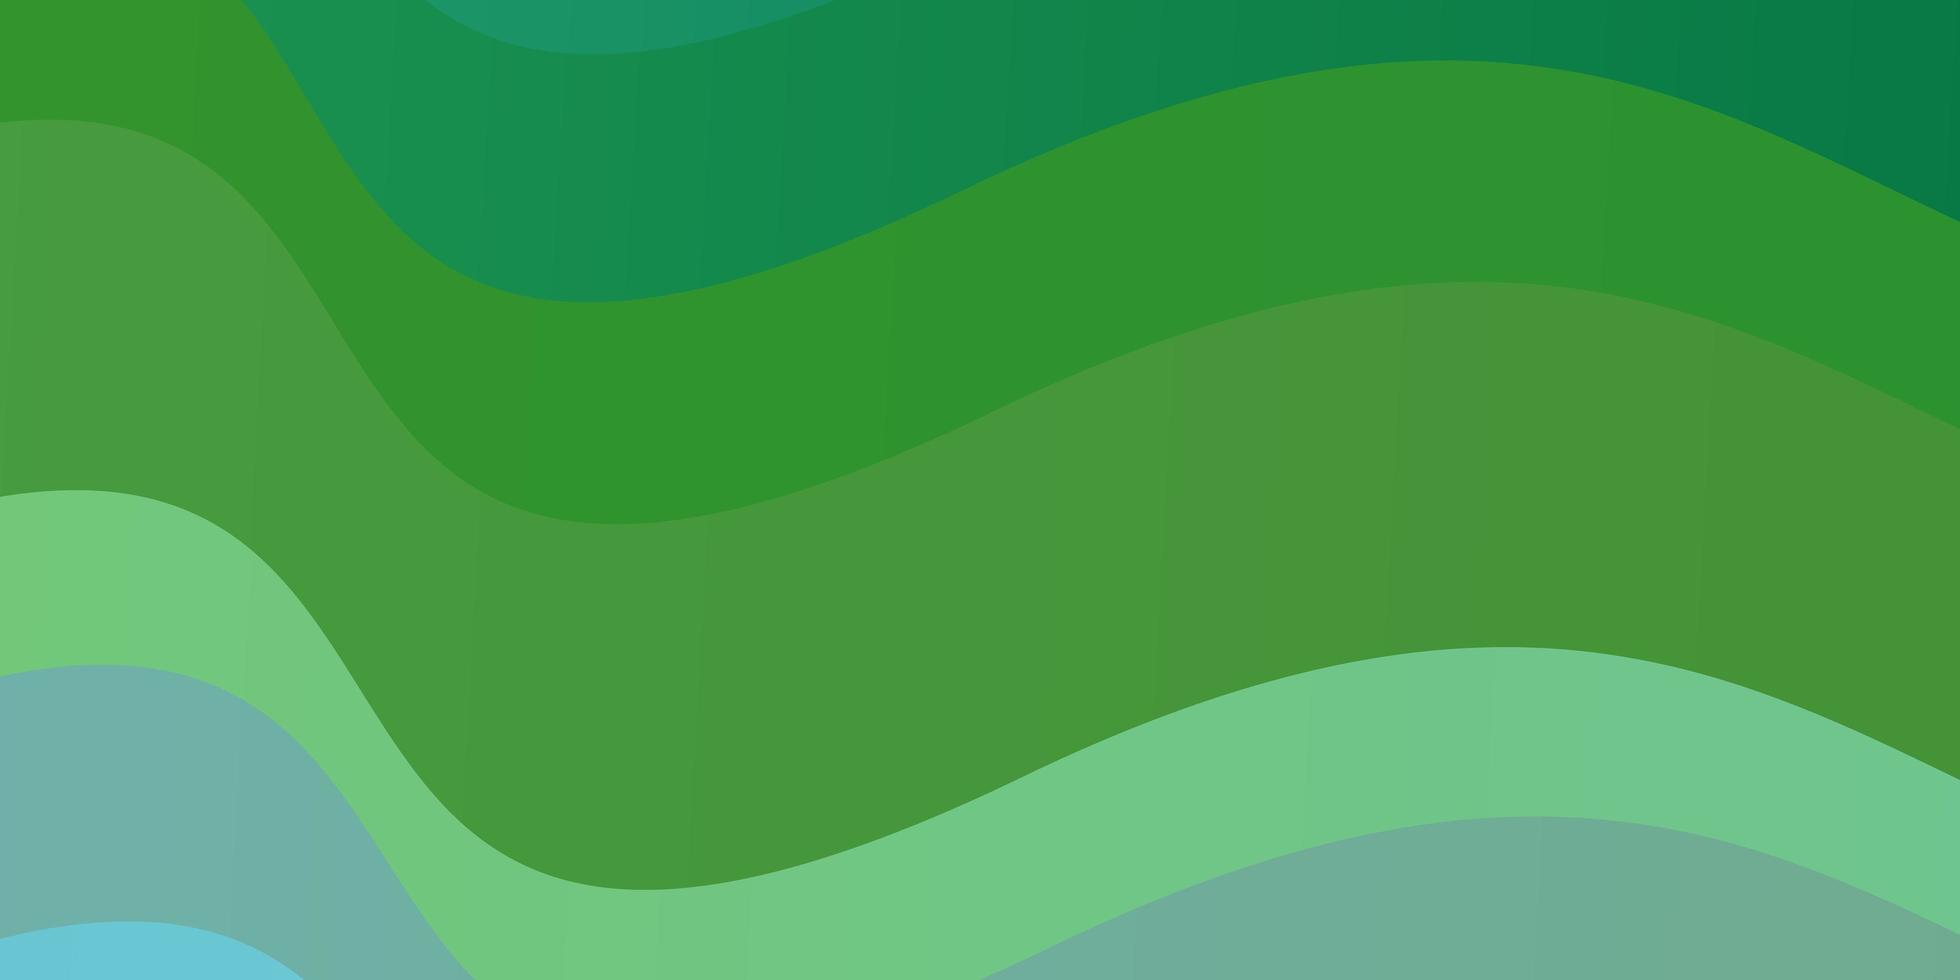 textura de vector verde azul claro con líneas torcidas ilustración de degradado en estilo simple con patrón de arcos para folletos folletos